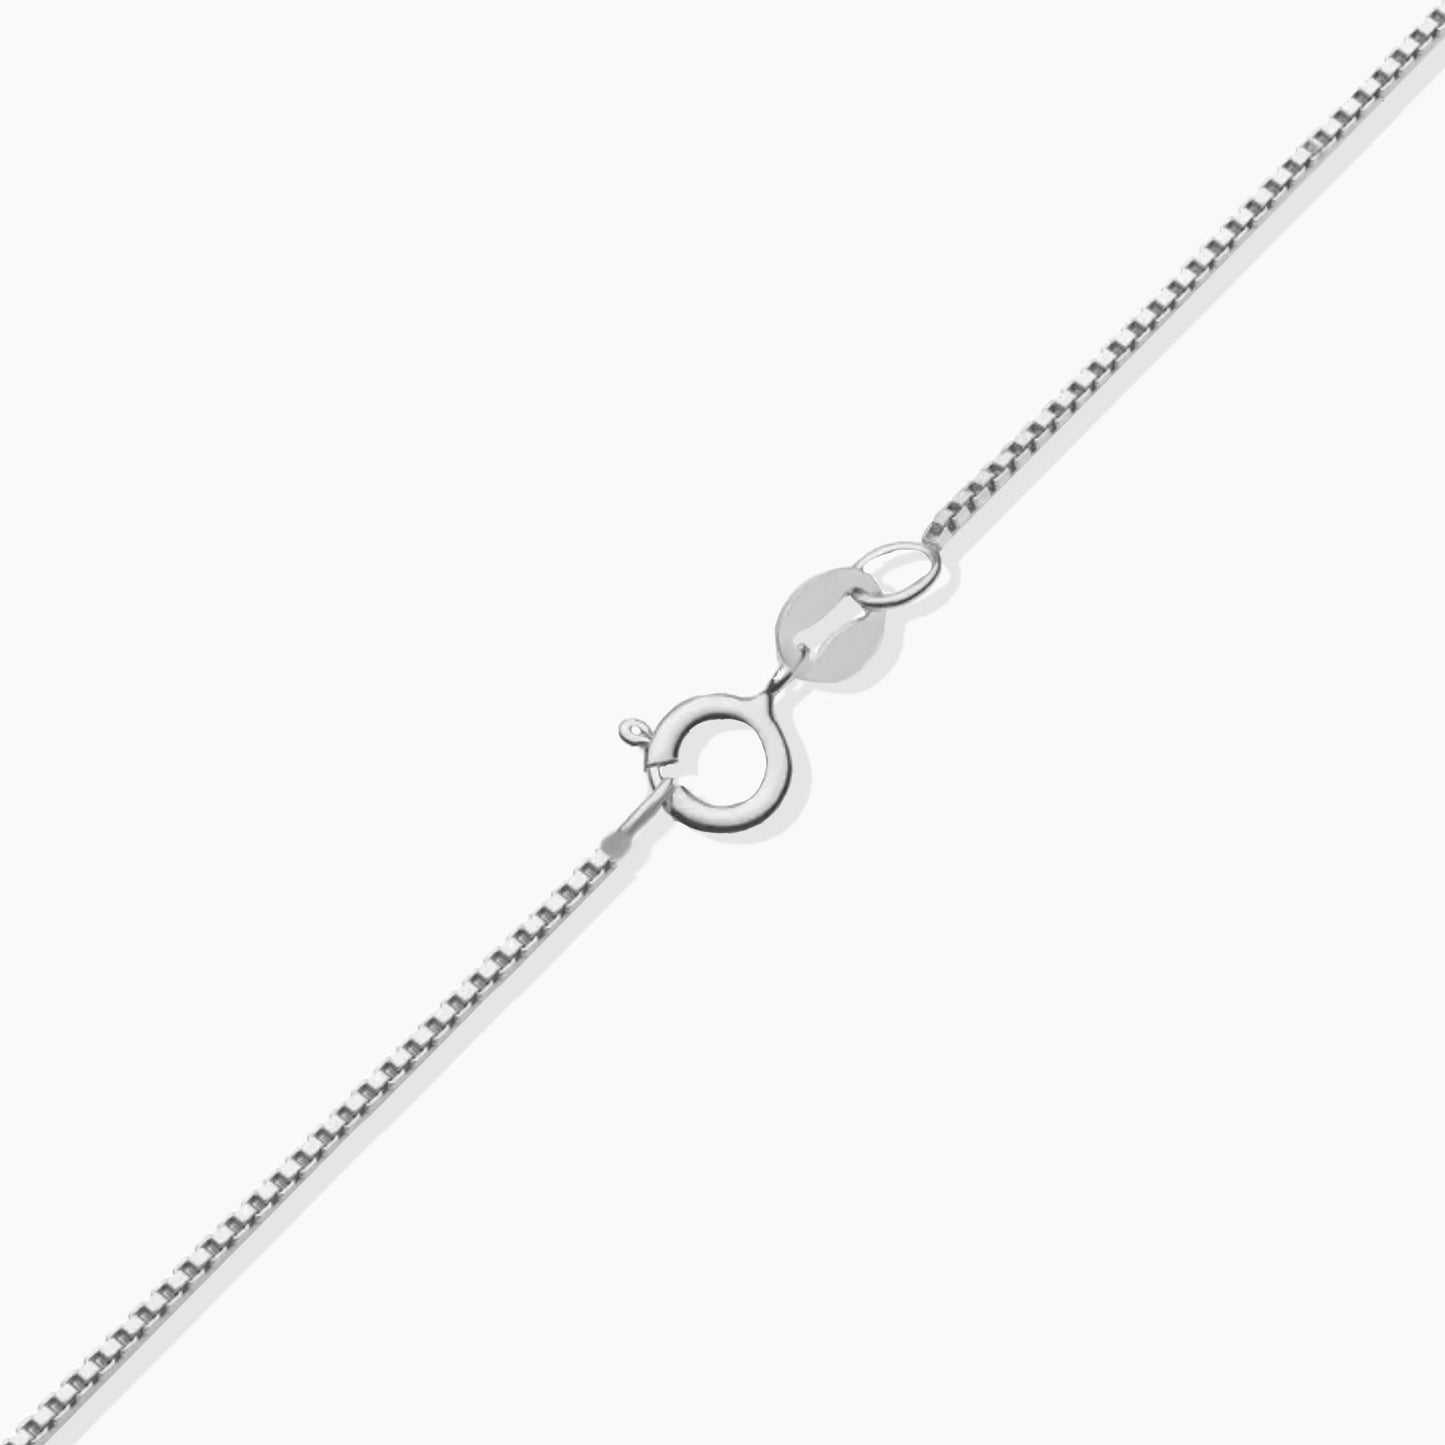 Garnet Galaxy Pendant Necklace in Sterling Silver